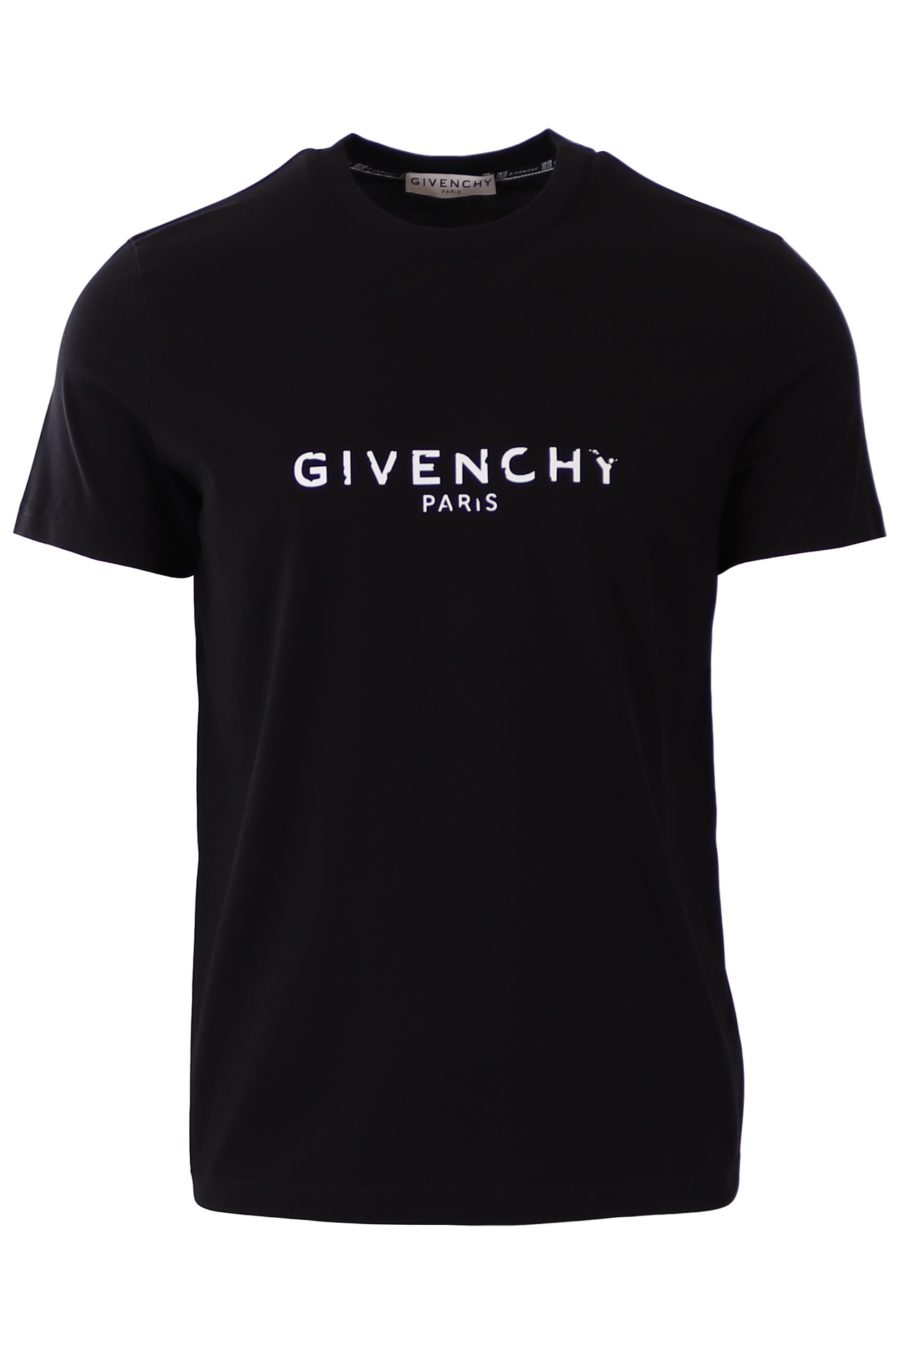 Givenchy Paris black slim fit T-shirt - 75b20a6c0b19f1ac411df0cae6c02b08ce7f778d